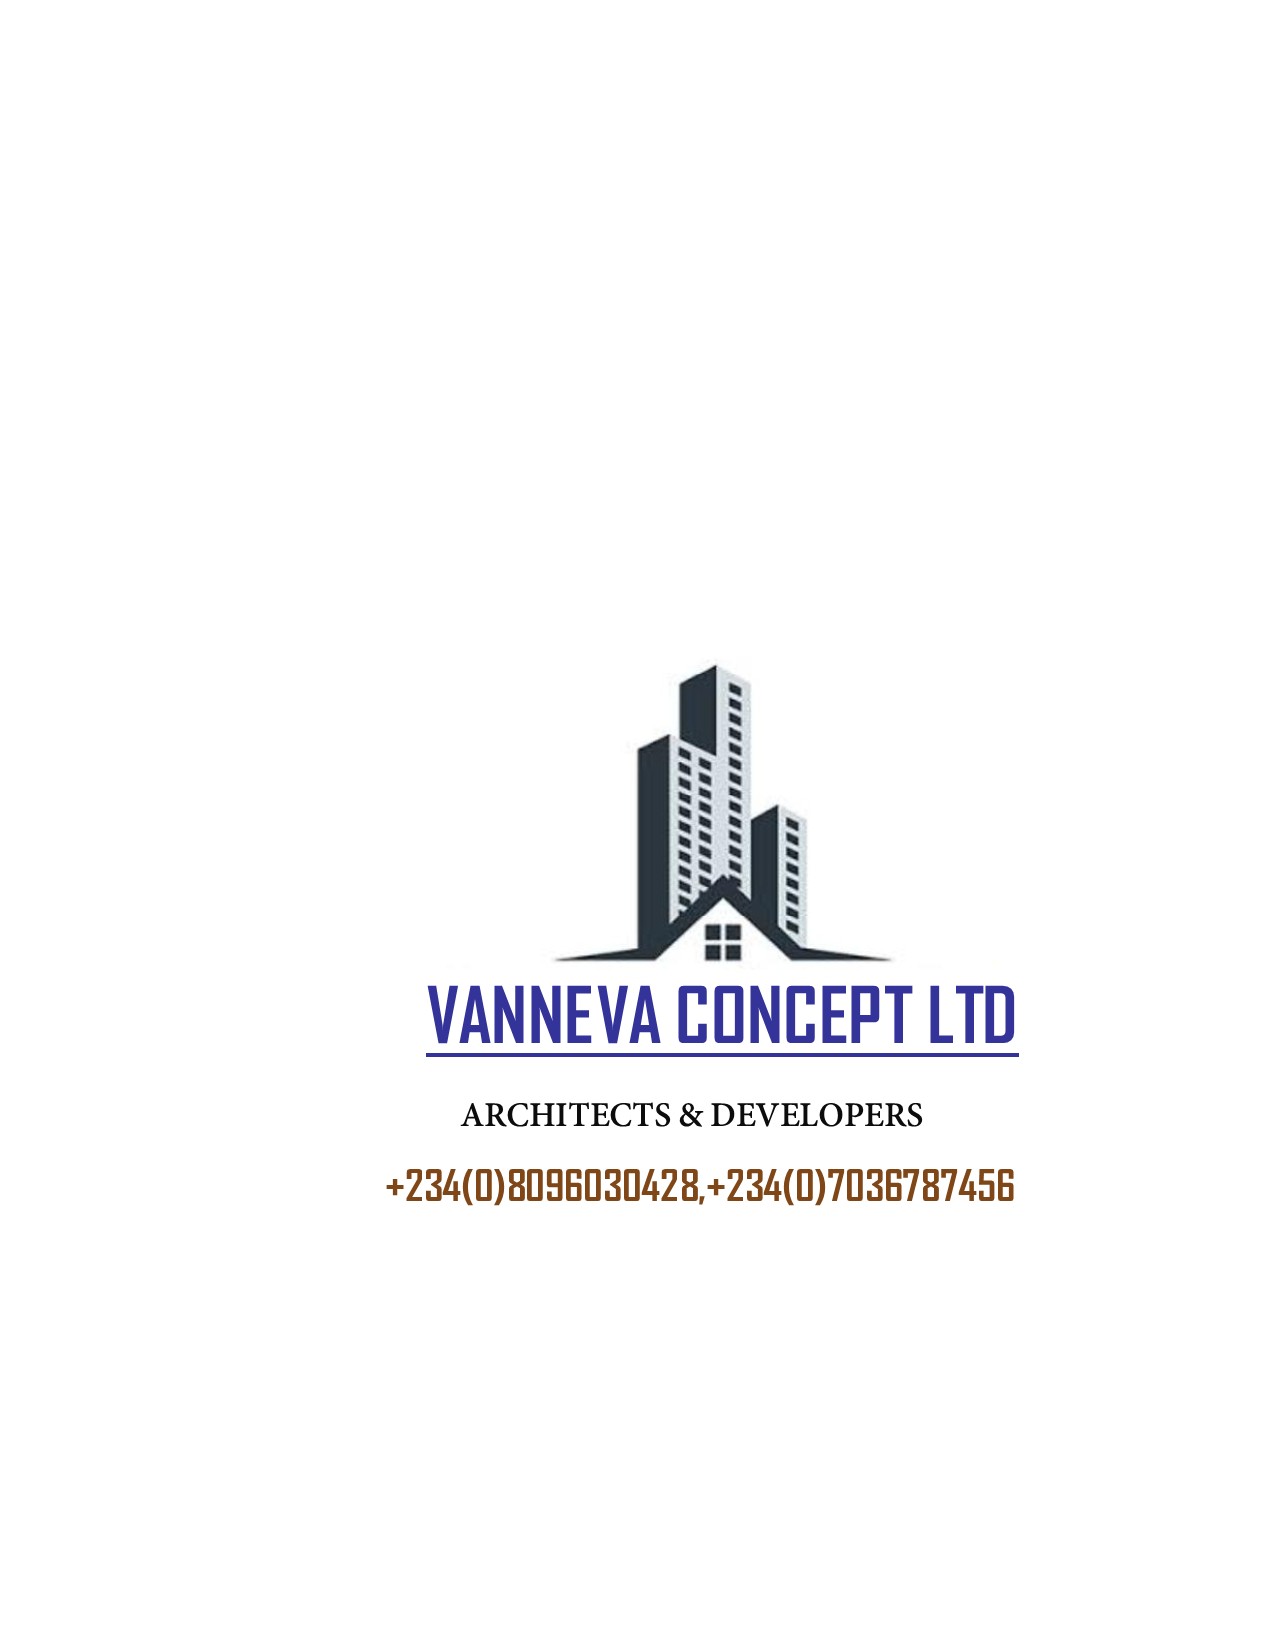 VANNEVA CONCEPT LTD anyservice service provider